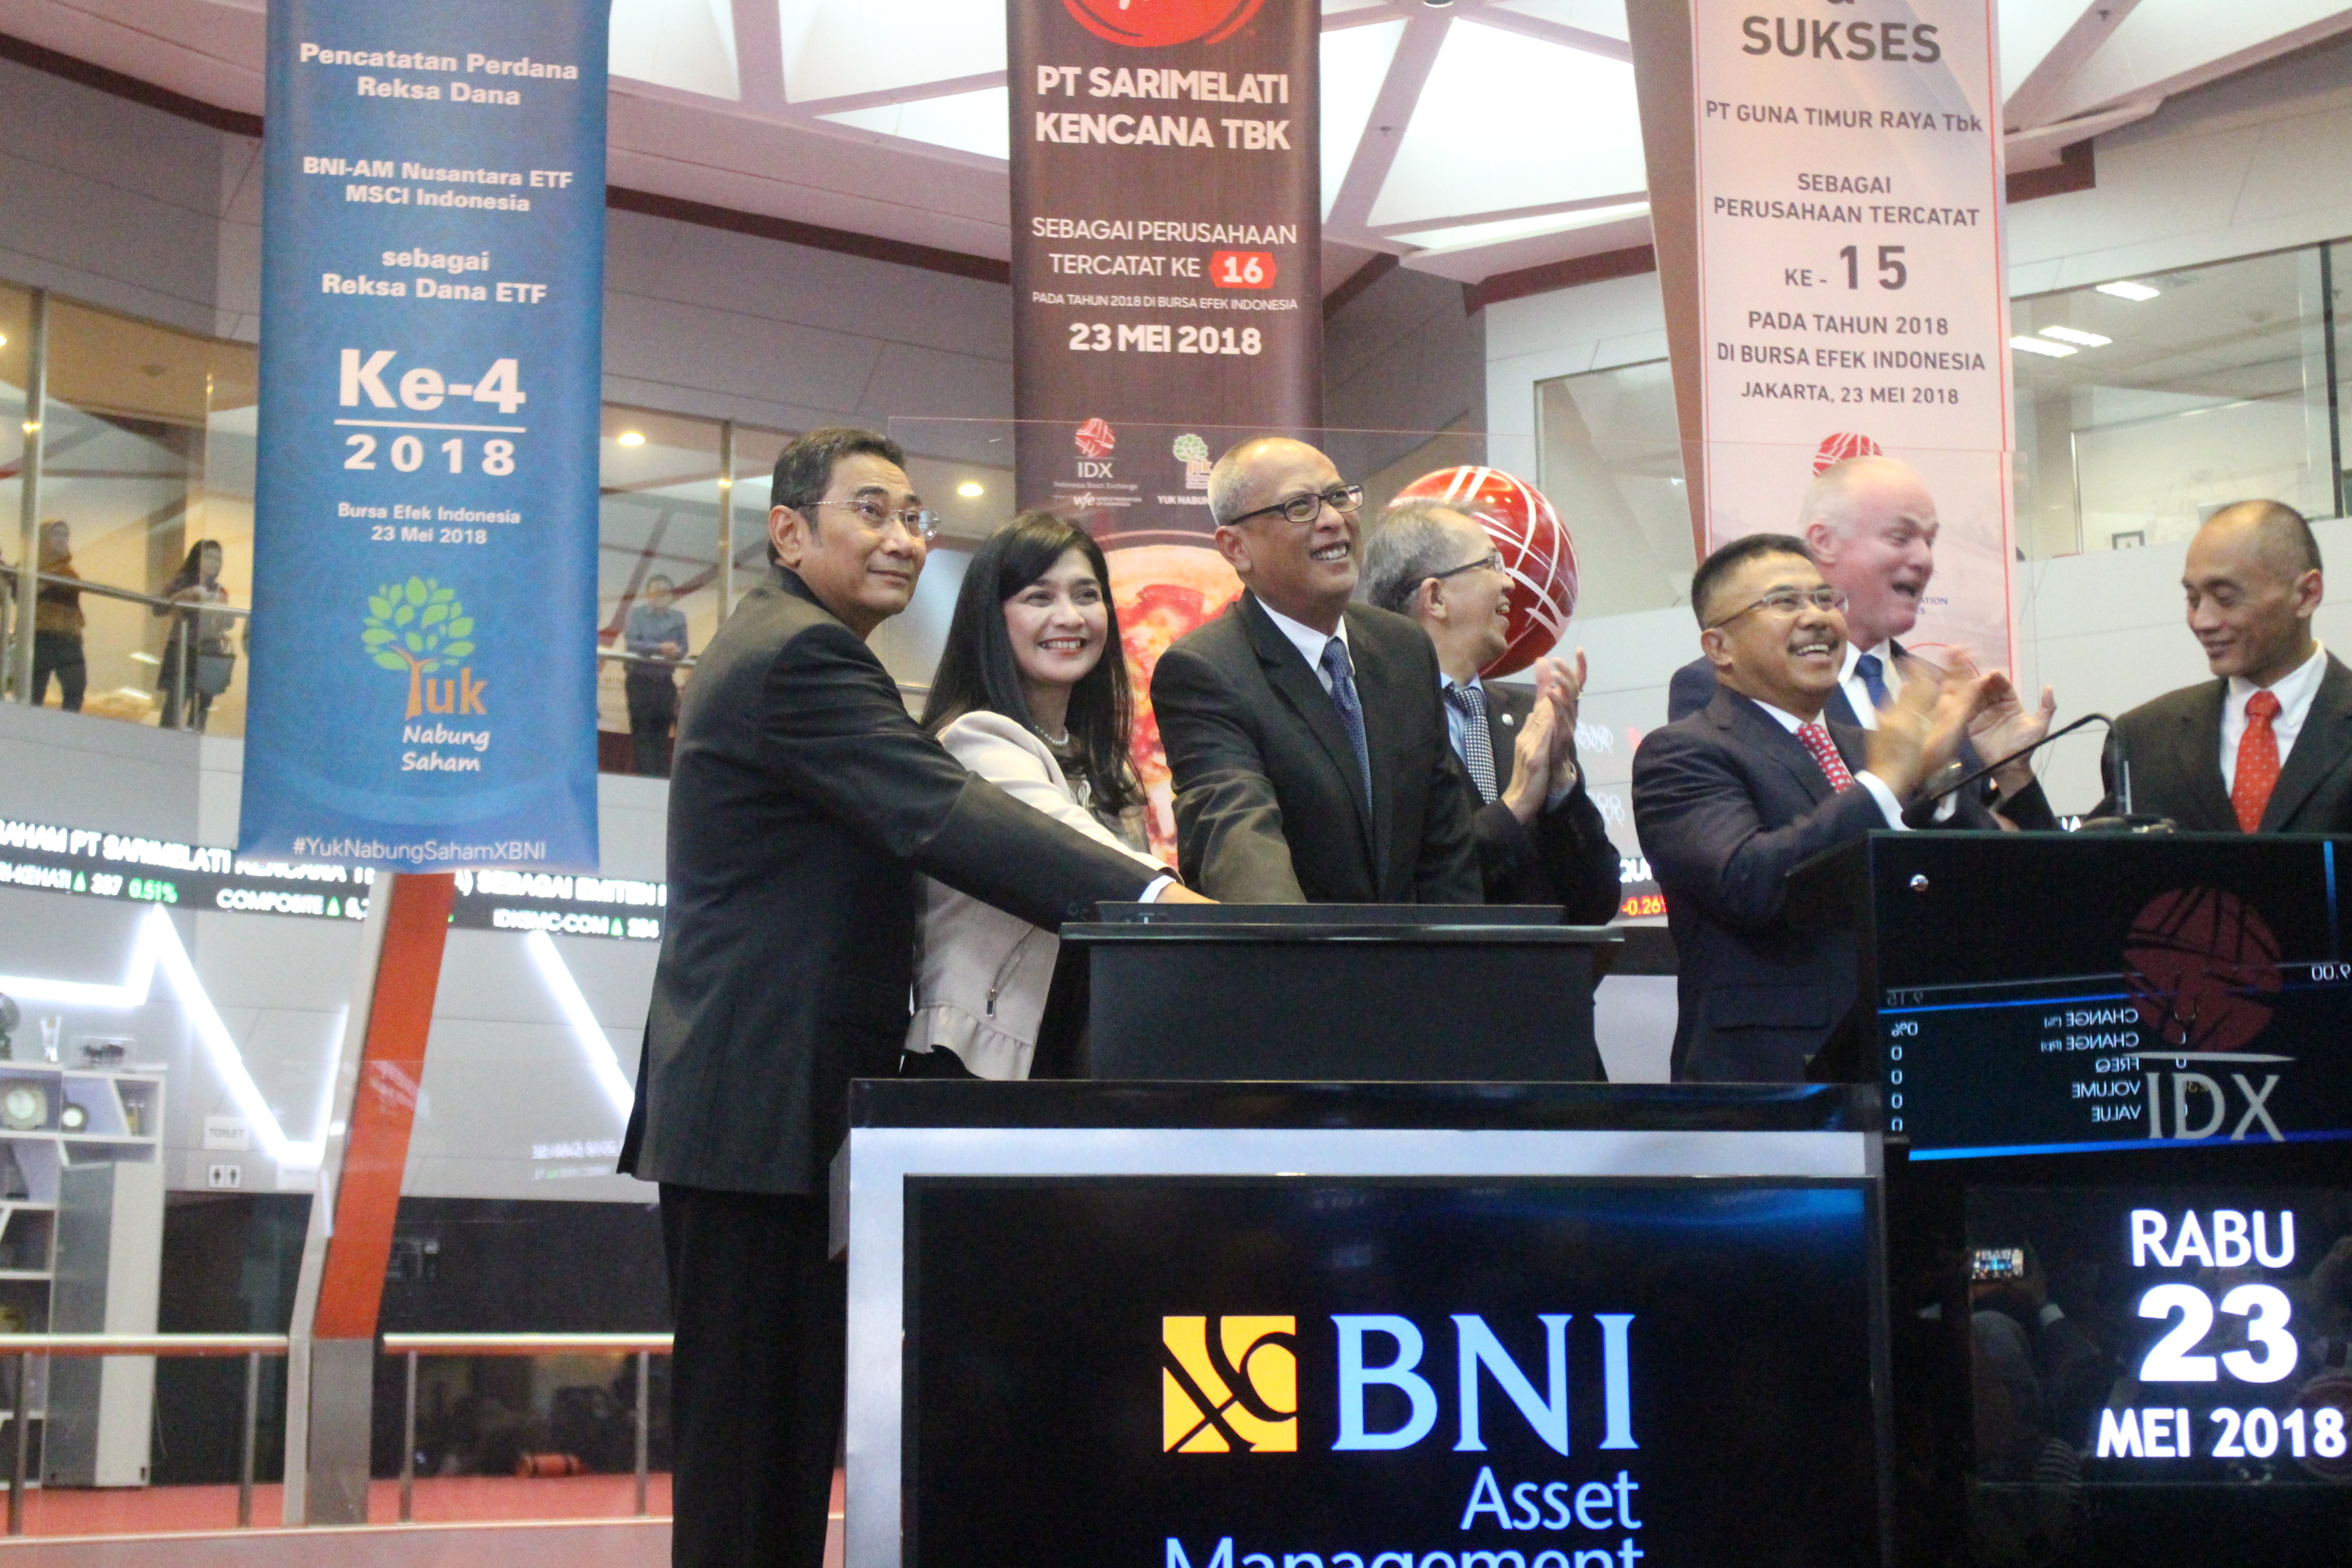 BNI Asset Management launched the BNI-AM Nusantara ETF MSCI Indonesia Index Mutual Fund